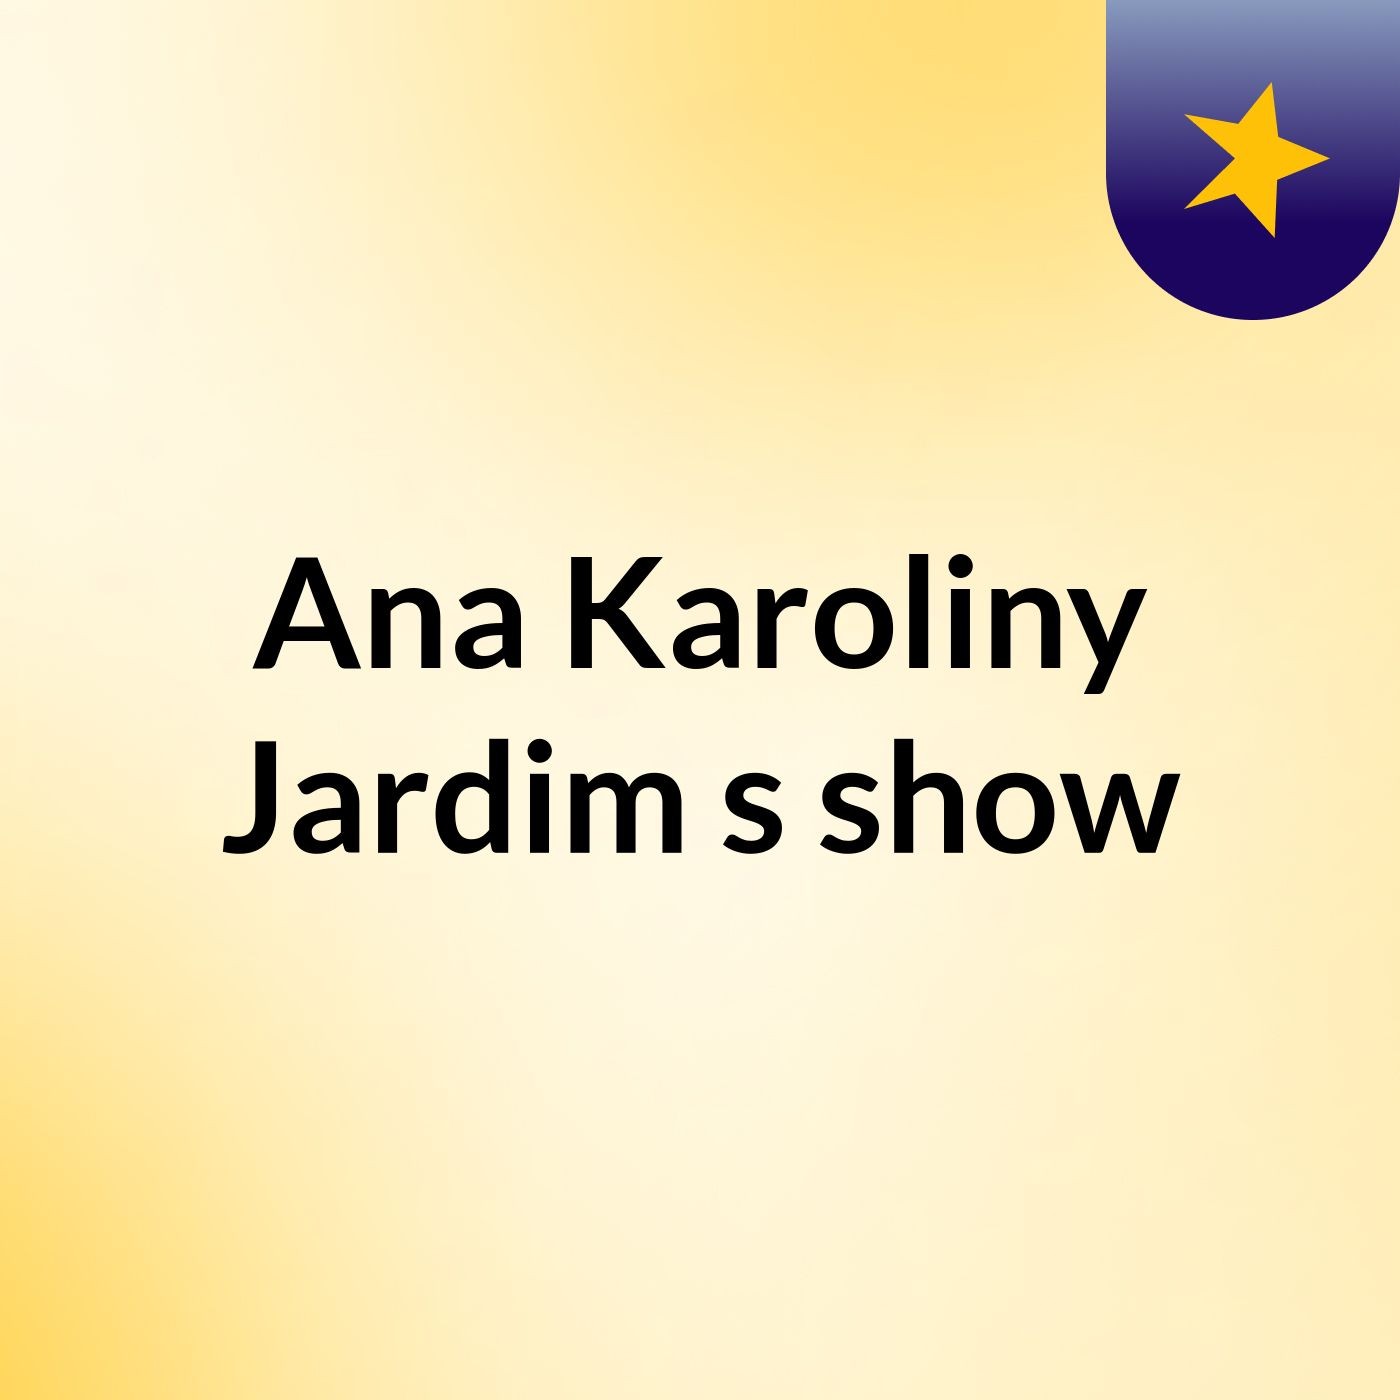 Ana Karoliny Jardim's show